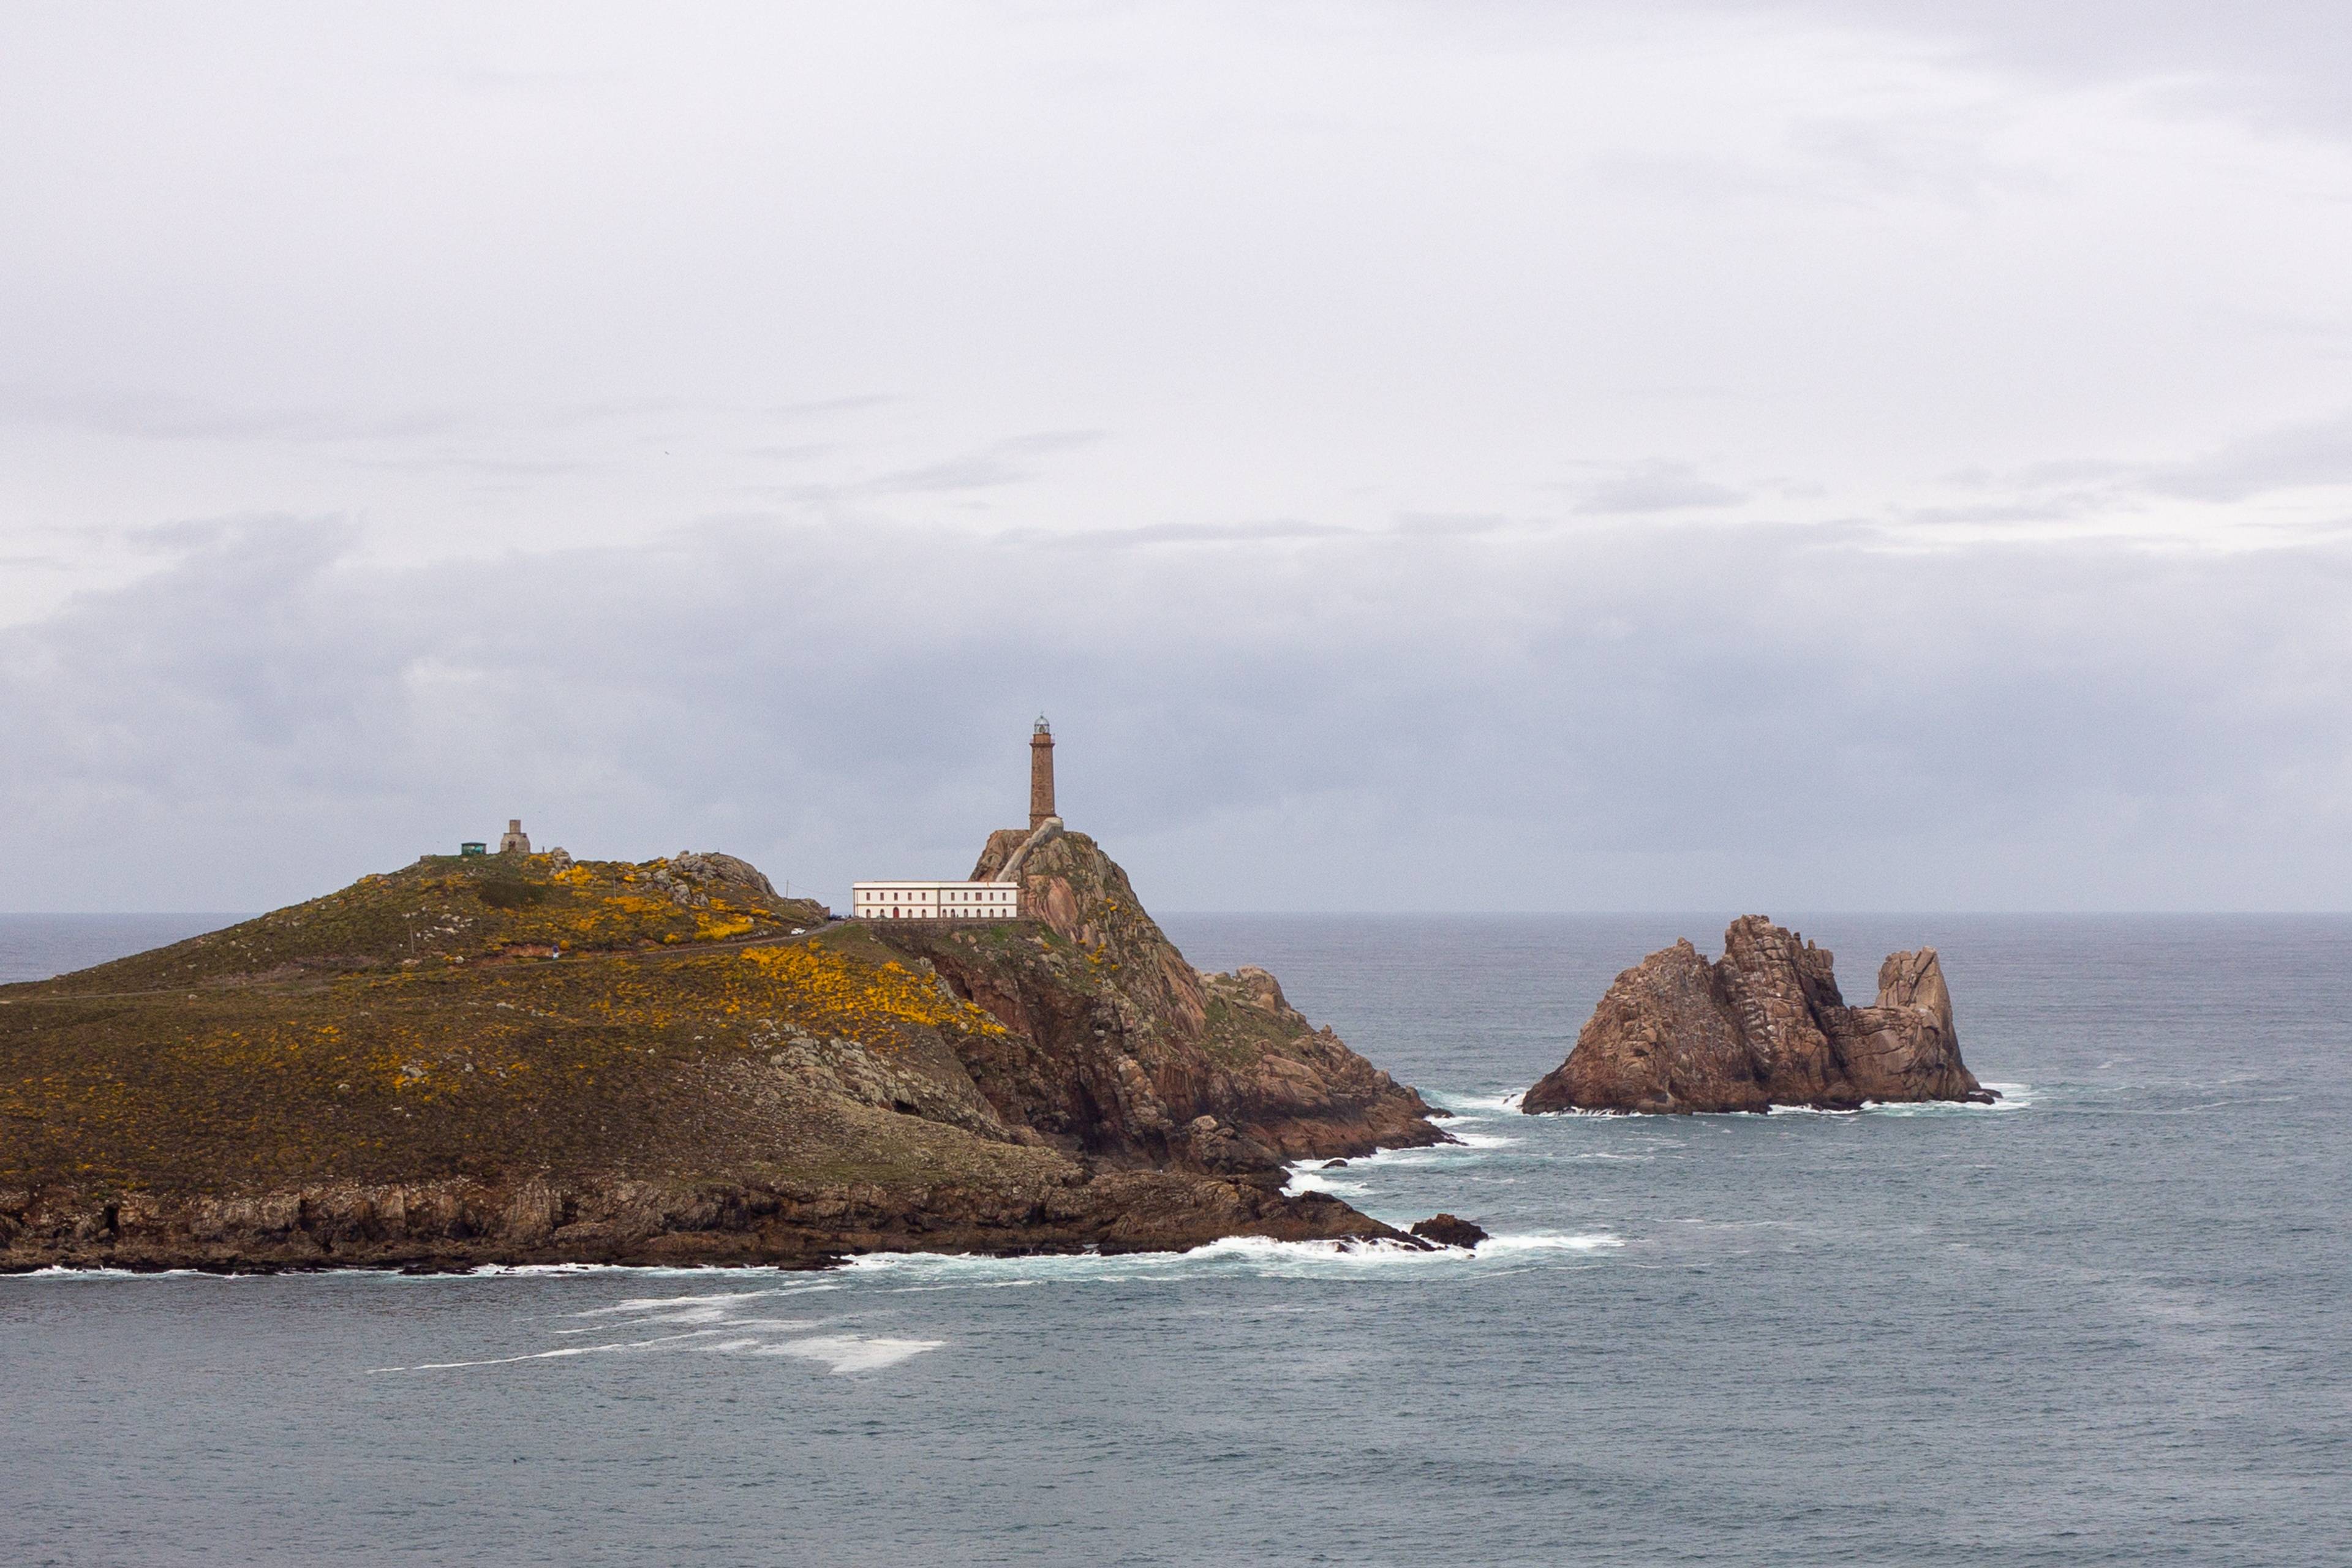 Cape Vilan Lighthouse